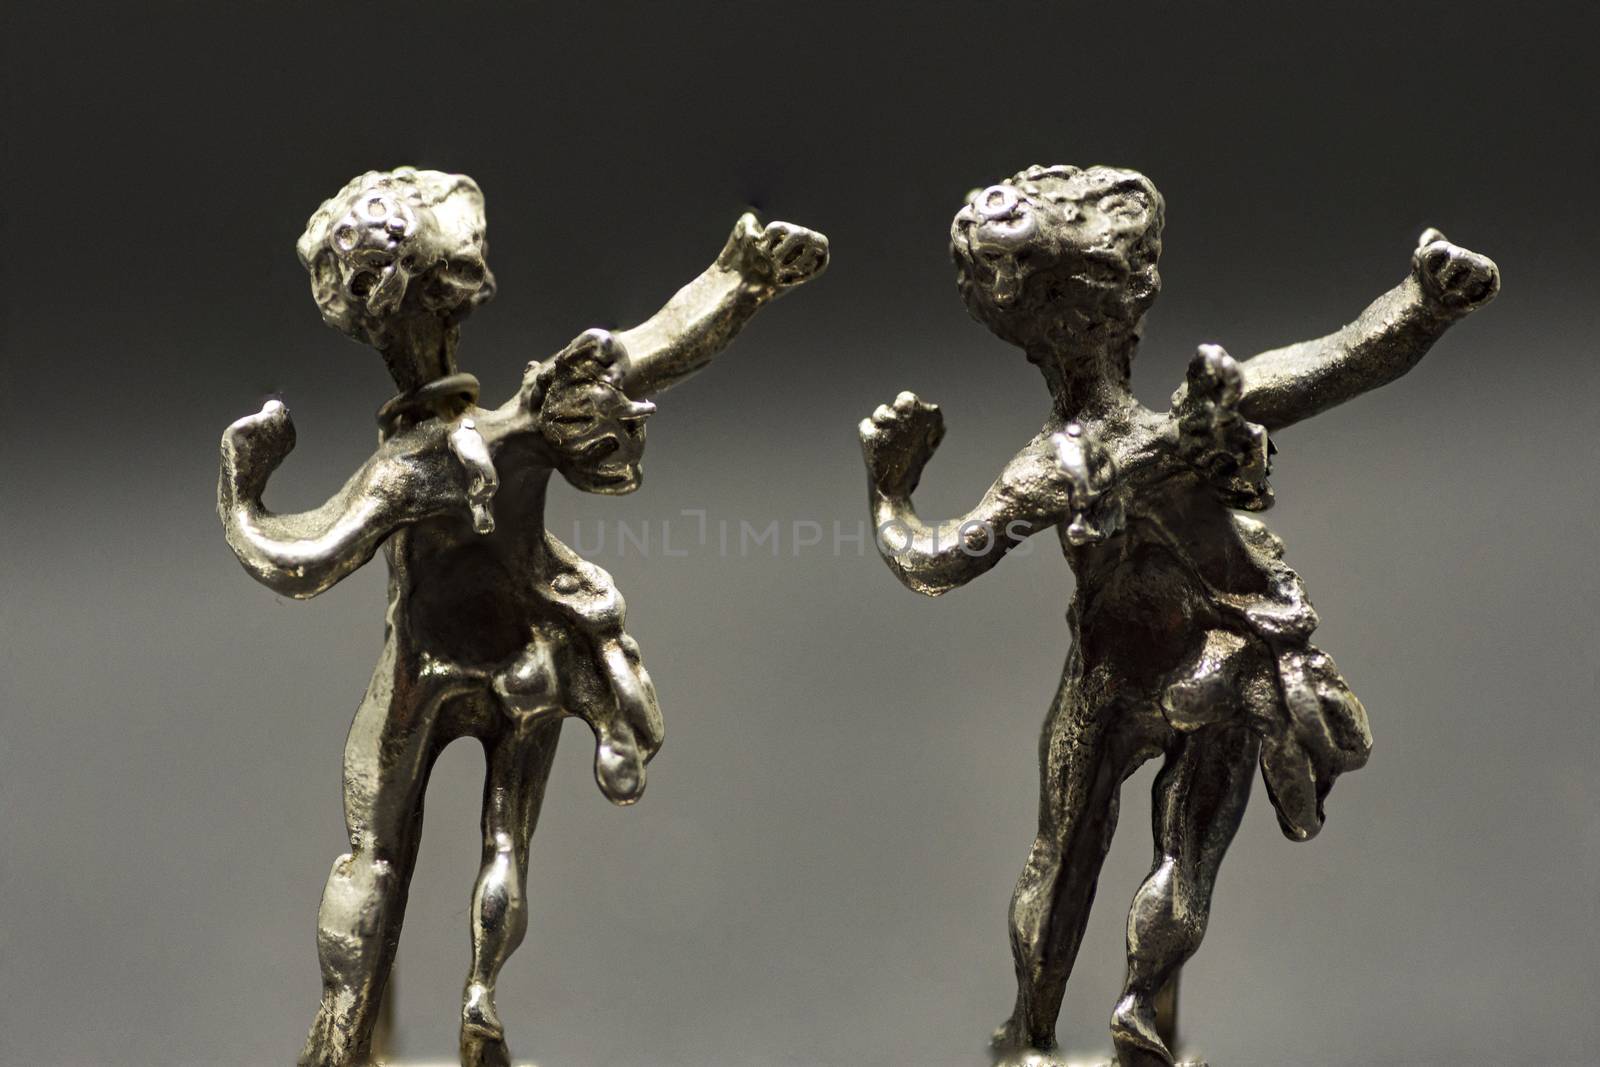 two metallic figurine angels are dancing